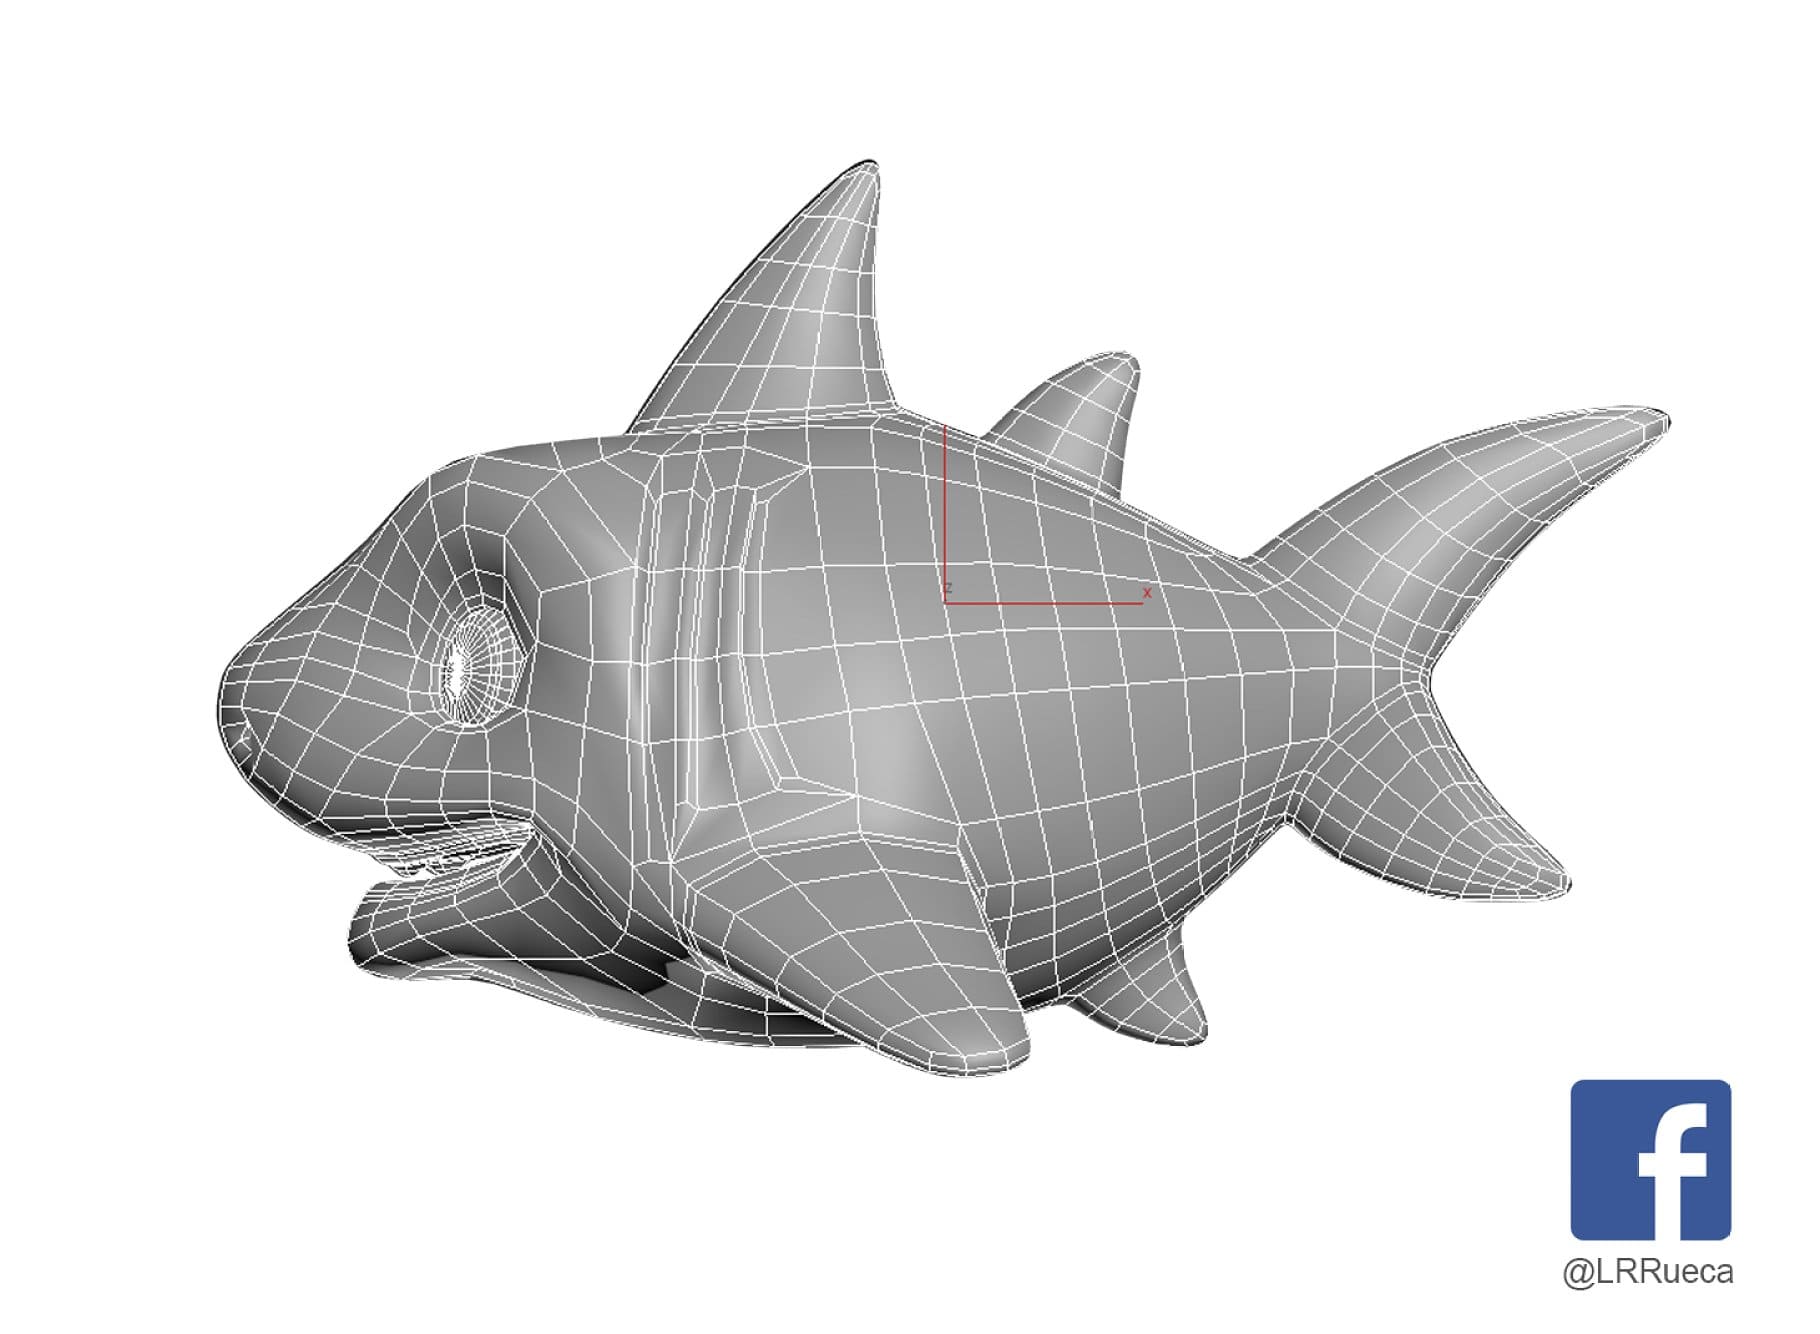 3D model of a shark side view.